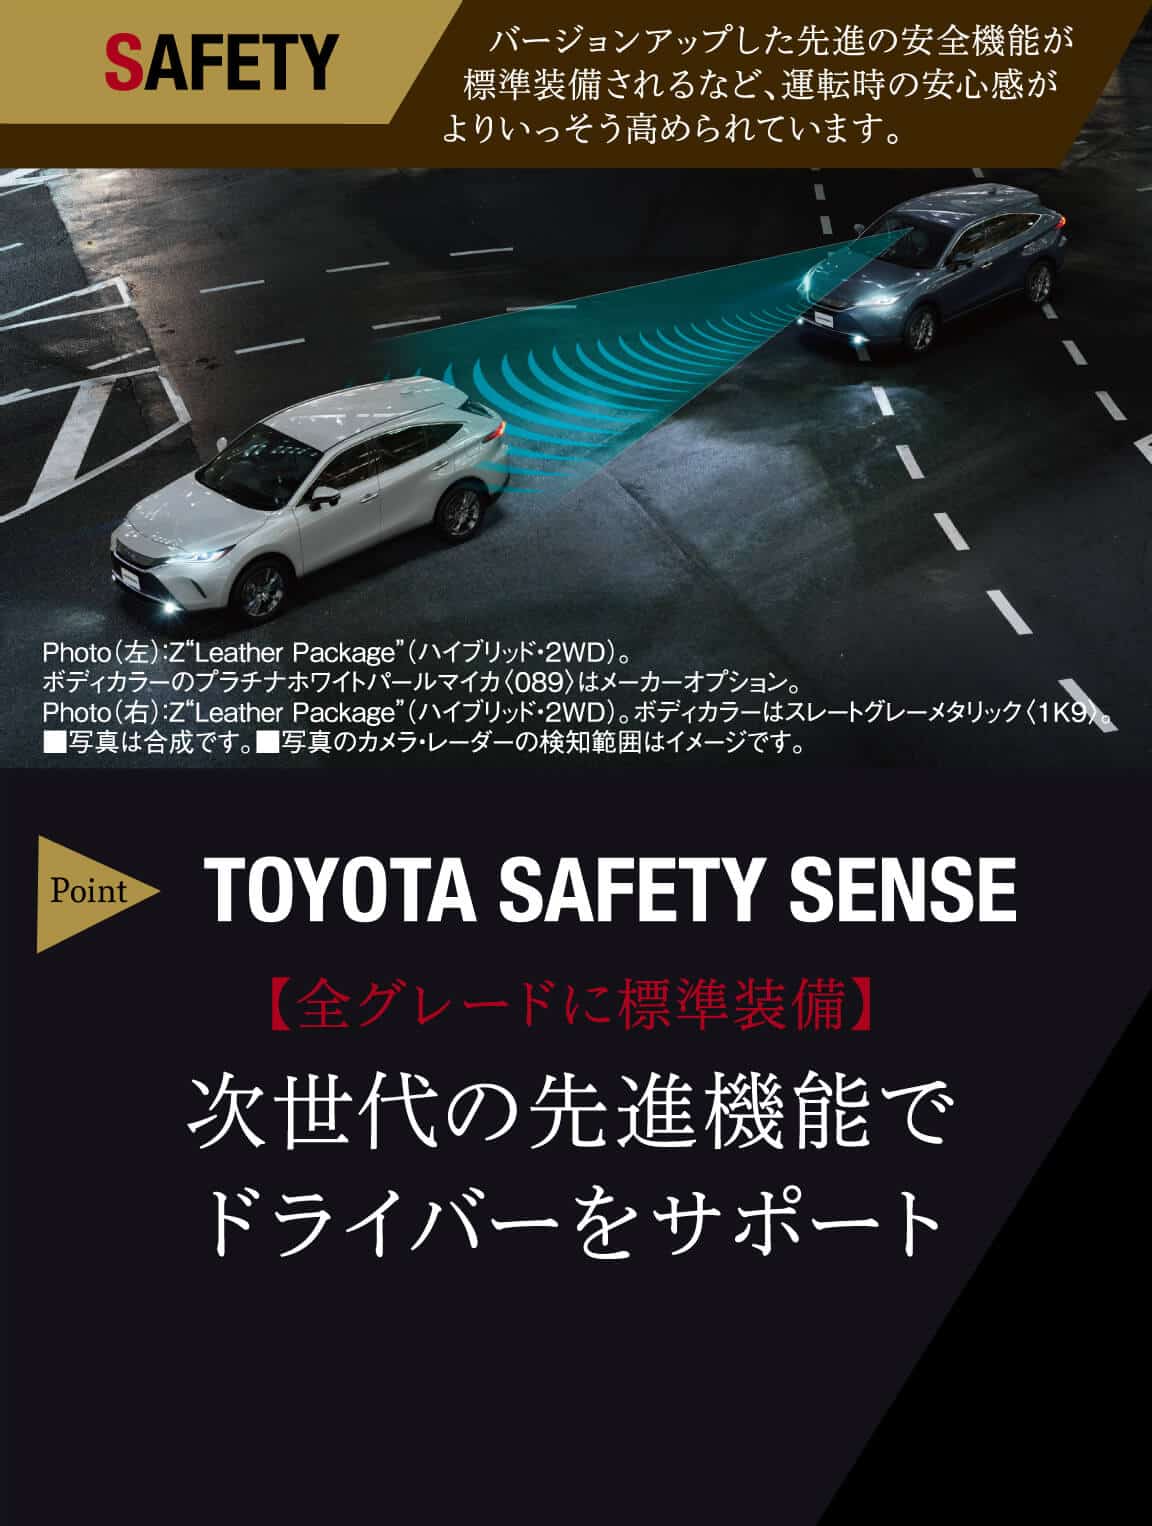 SAFETY バージョンアップした先進の安全機能が標準装備されるなど、運転時の安心感がよりいっそう高められています。Point TOYOTA SAFETY SENSE 【全グレードに標準装備】次世代の先進機能でドライバーをサポート